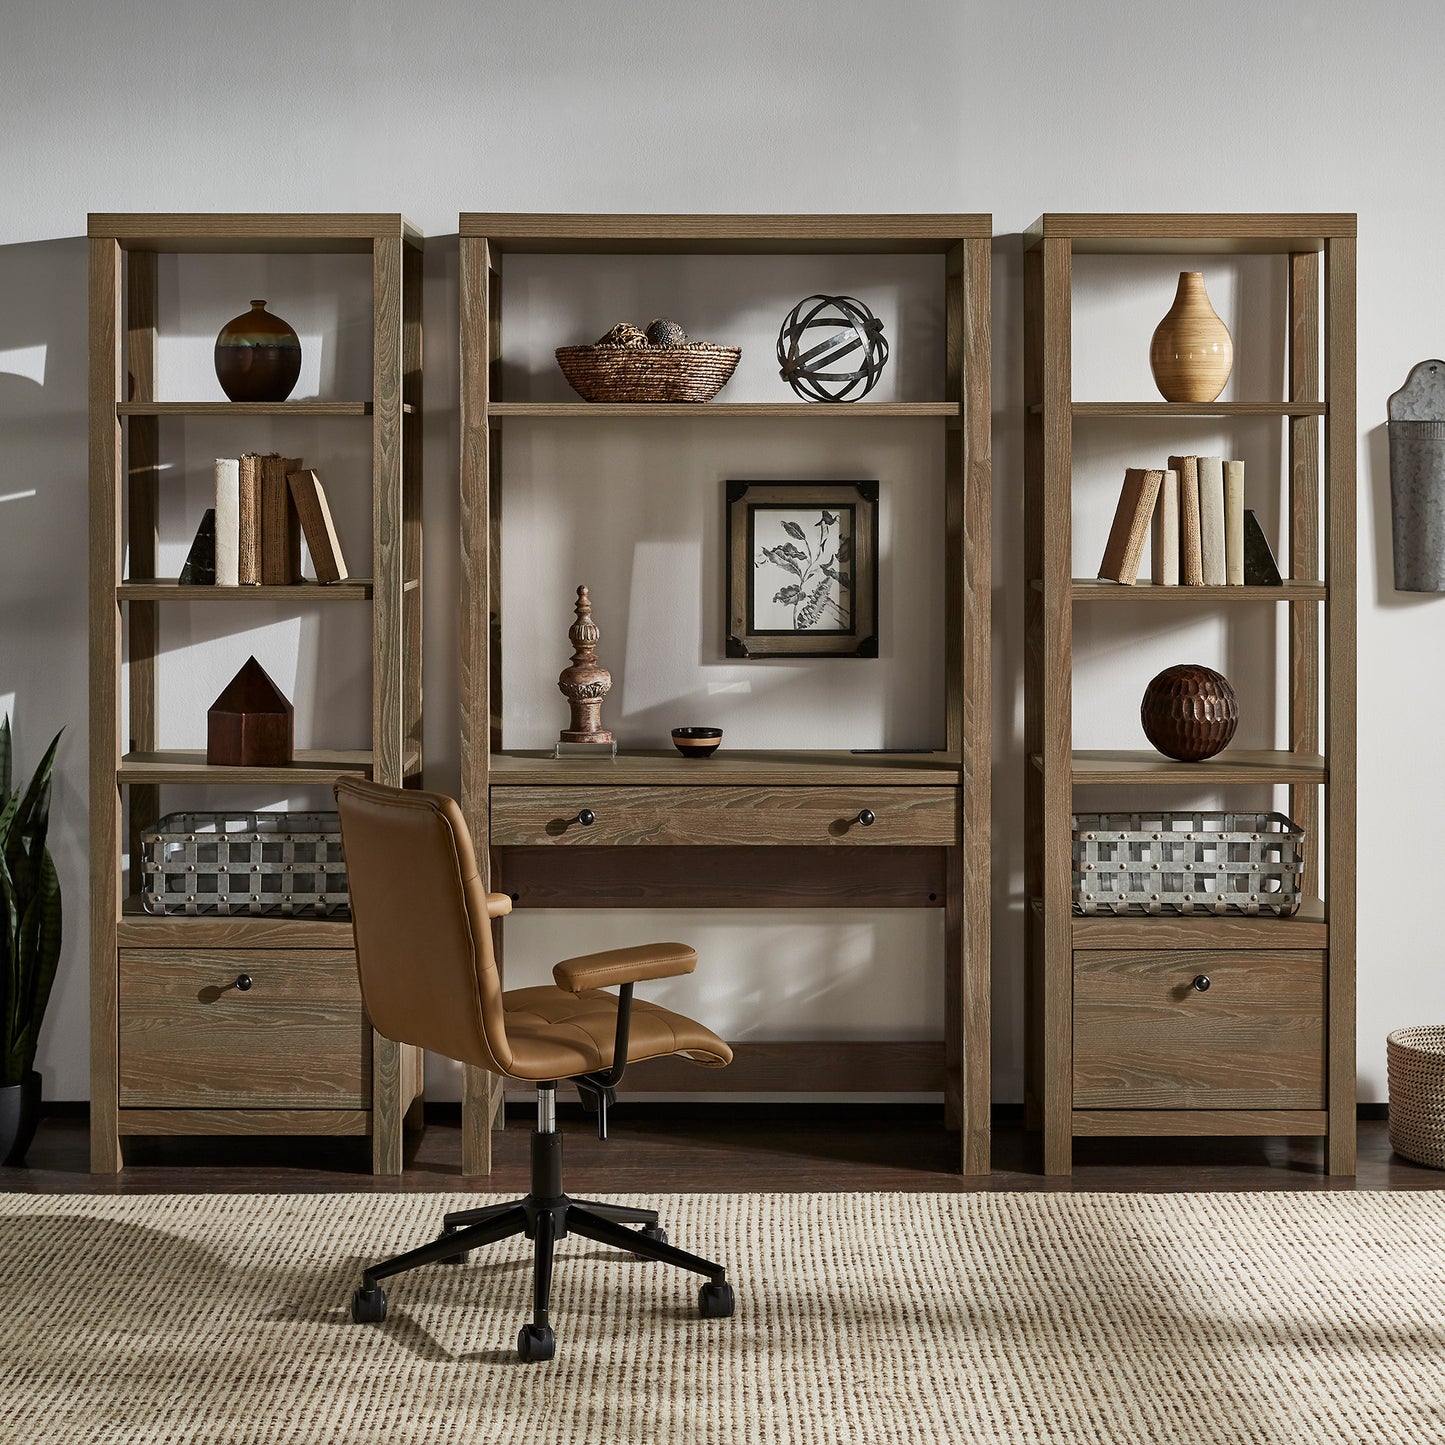 4-tier/5-tier Adjustable Bookshelf with Drawer - Medium Oak Finish